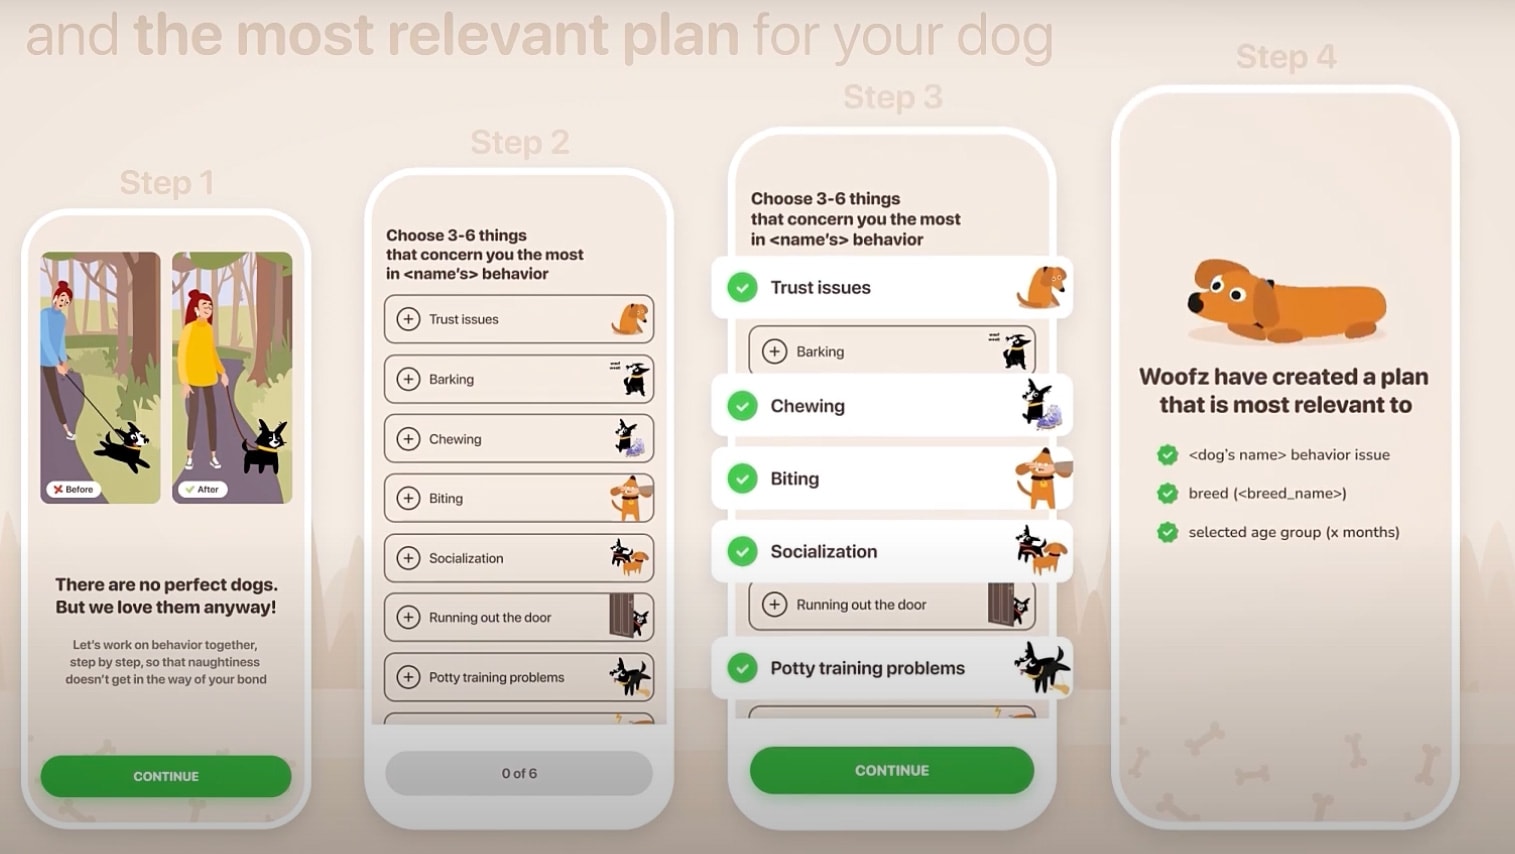 woofz dog training app - relevant plan